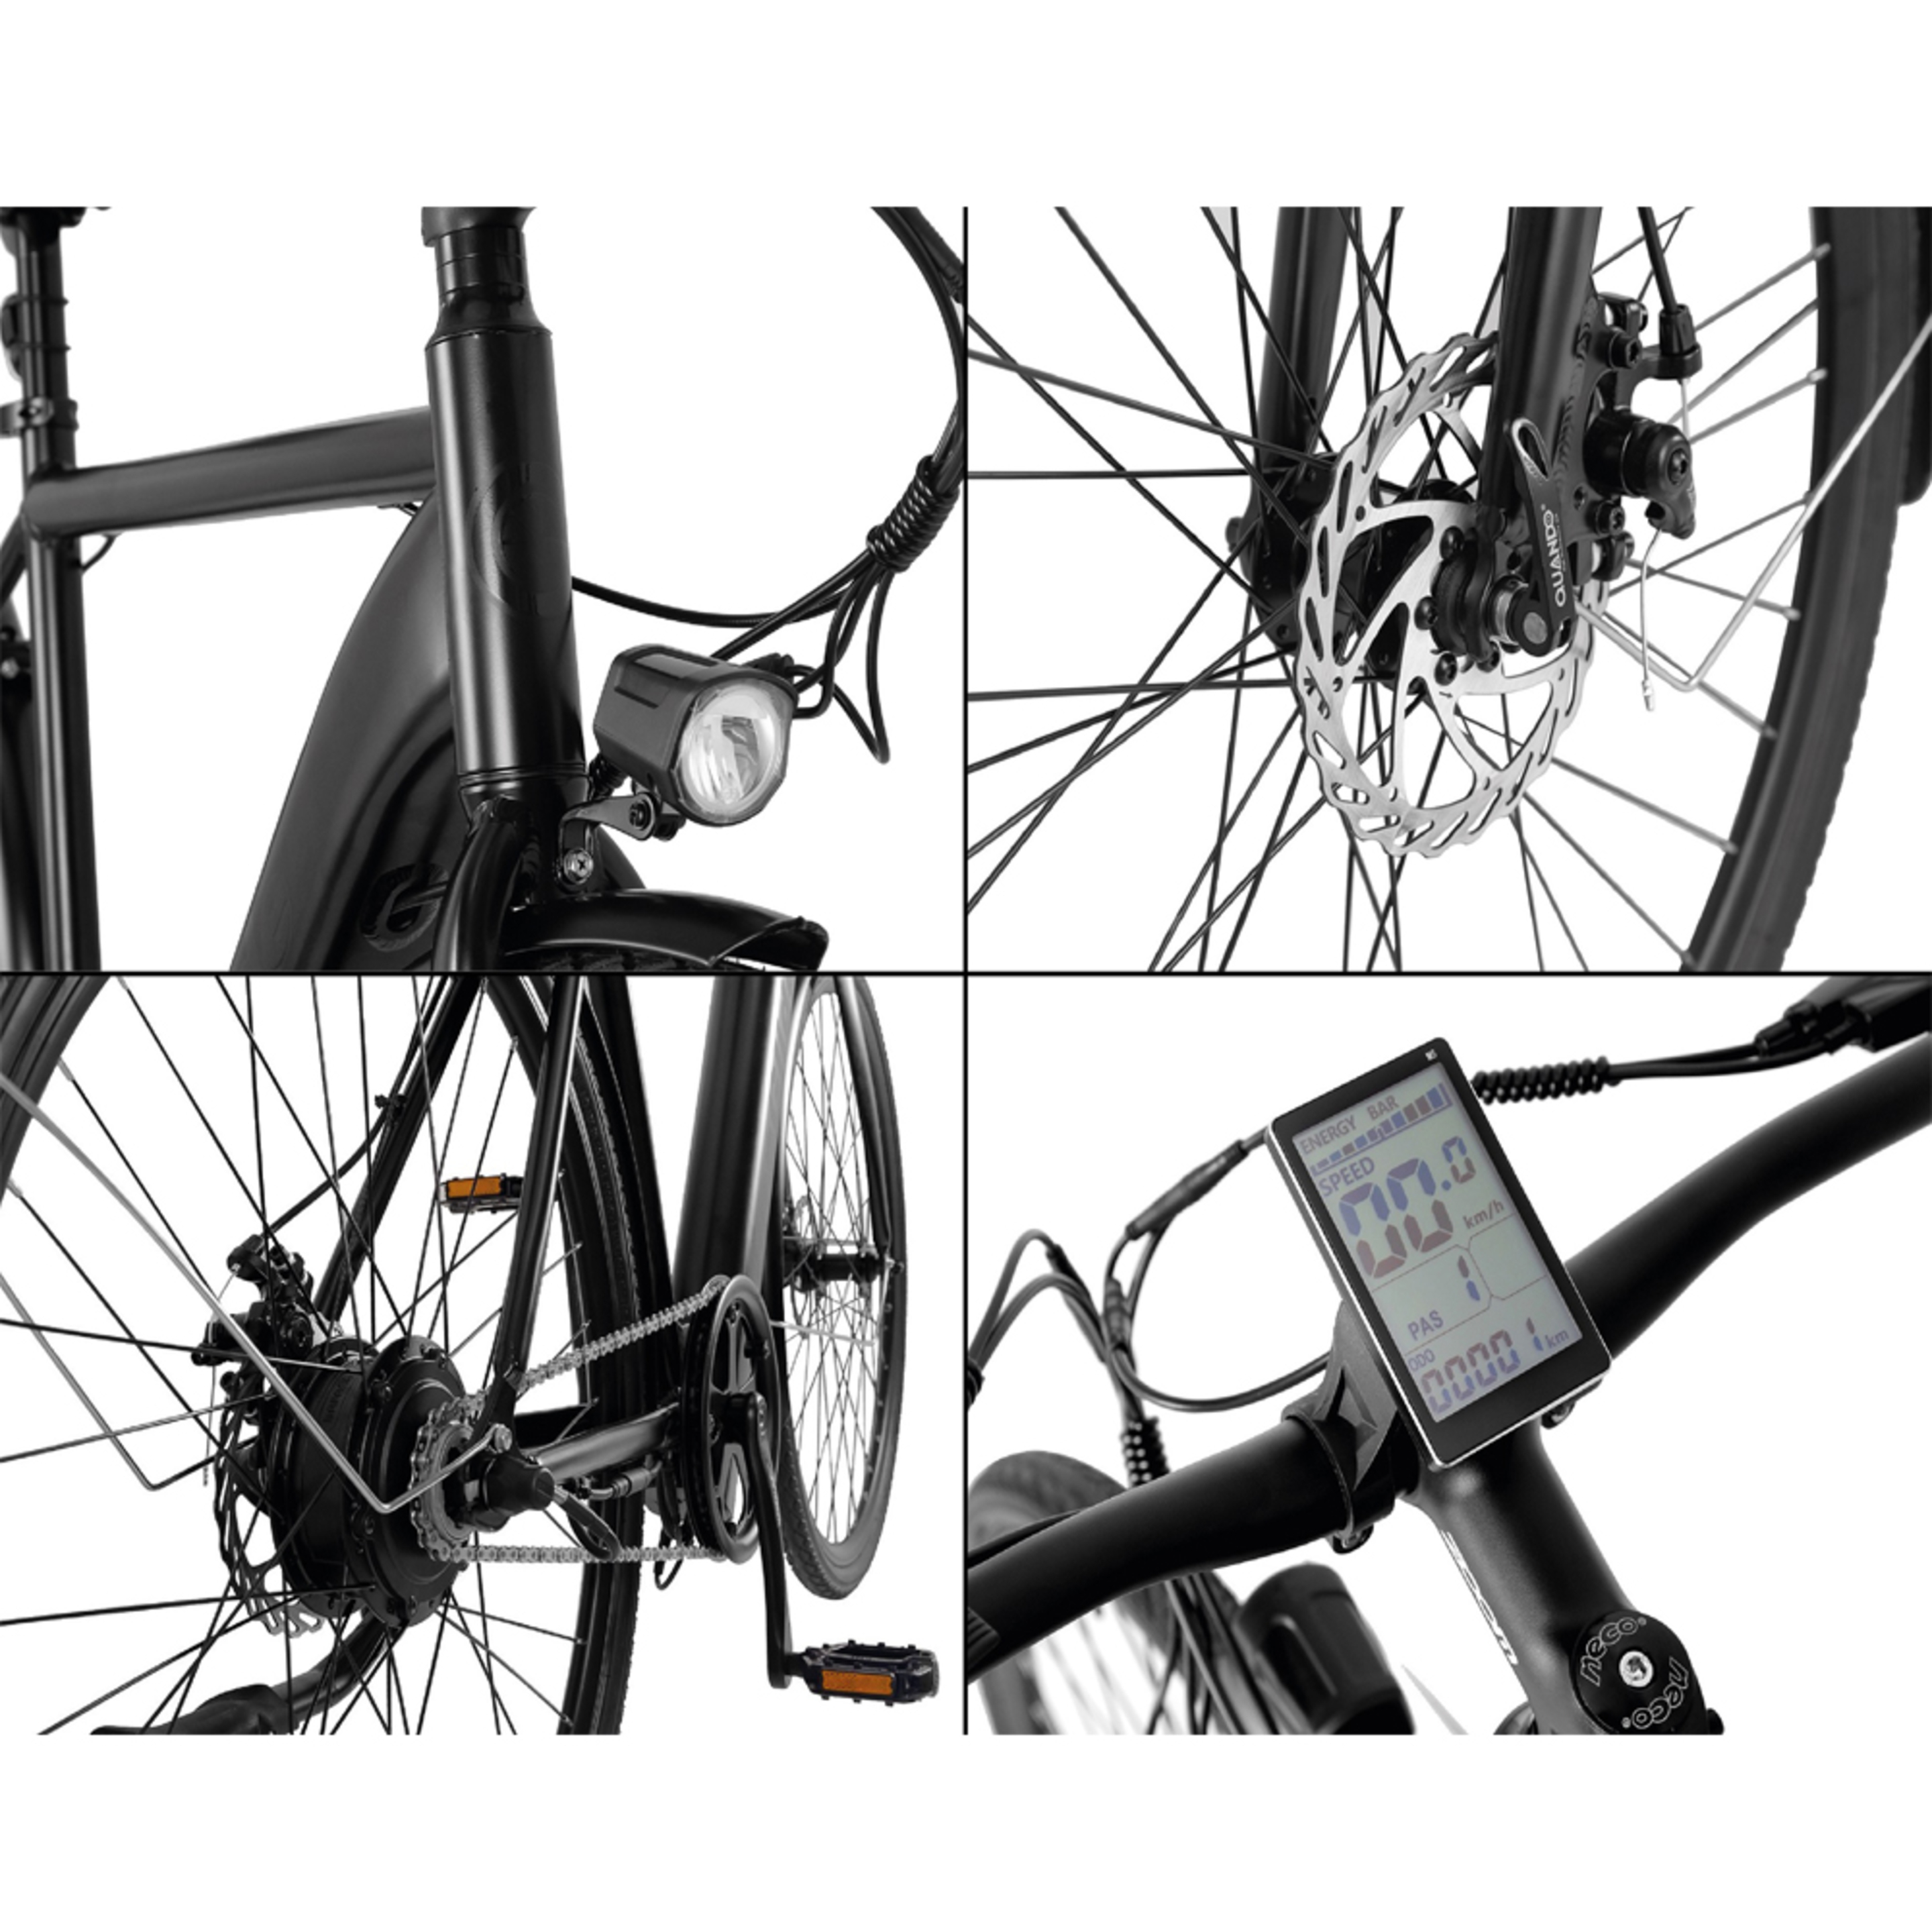 Bicicleta Eléctrica Urbanglide M7 250w - 25km/h - Autonomía 70 Km*